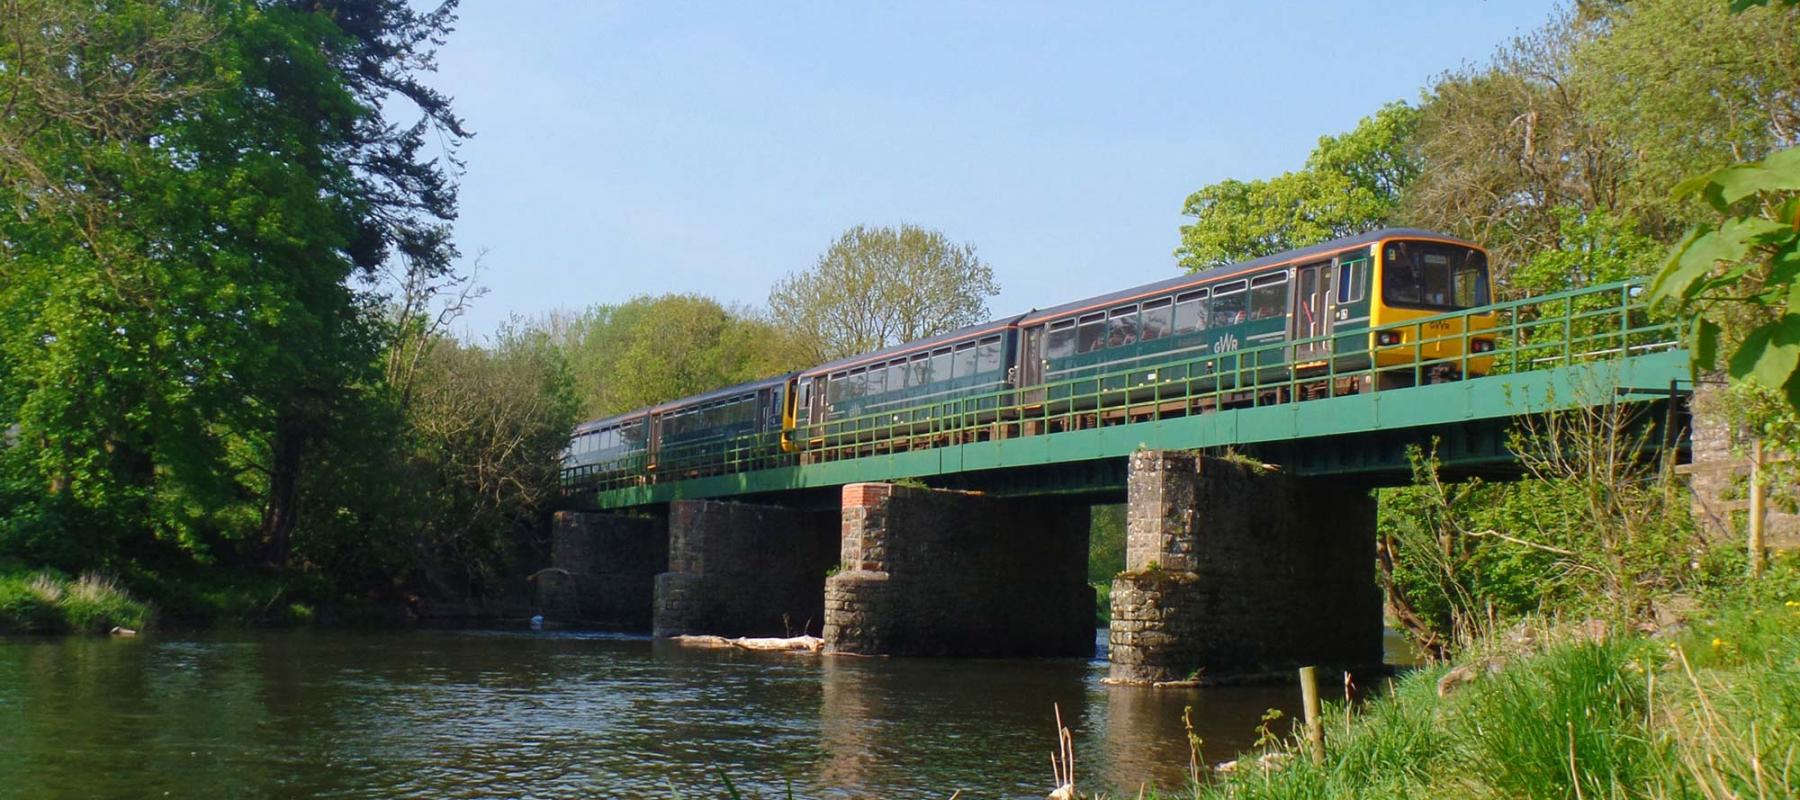 Train on Black Bridge near Umberleigh on the Tarka Line